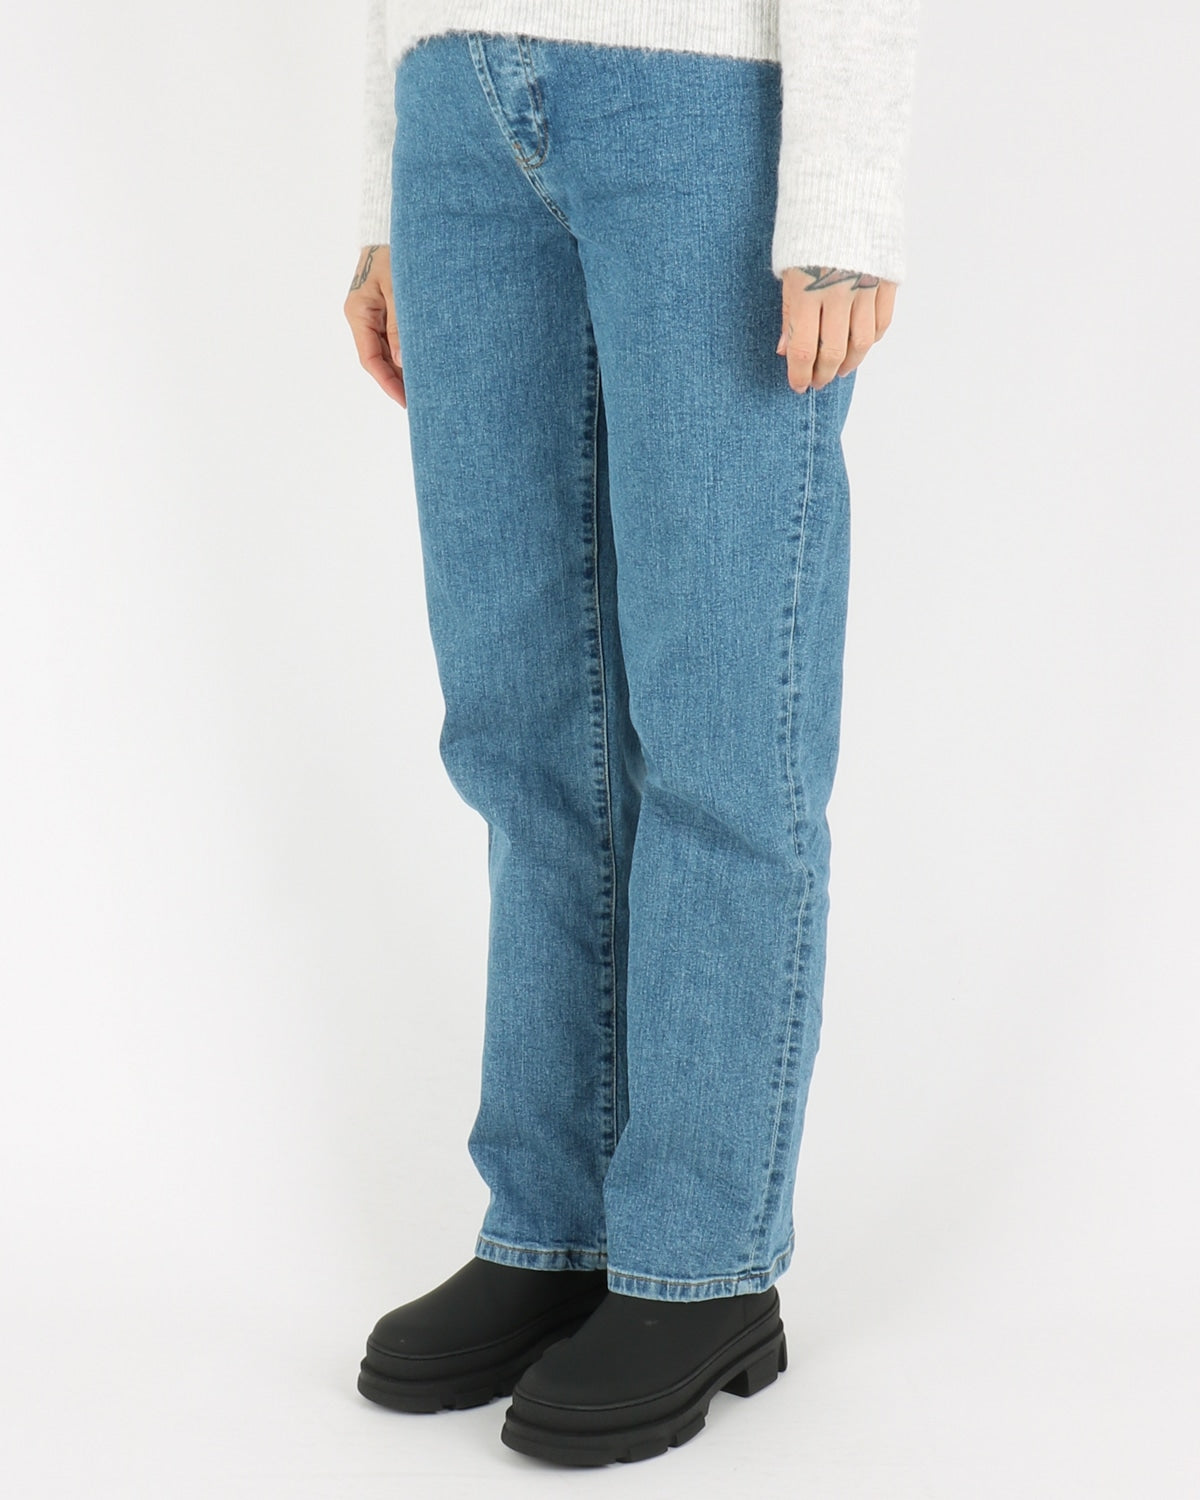 woodbird_maria jeans_stone blue jeans_2_3